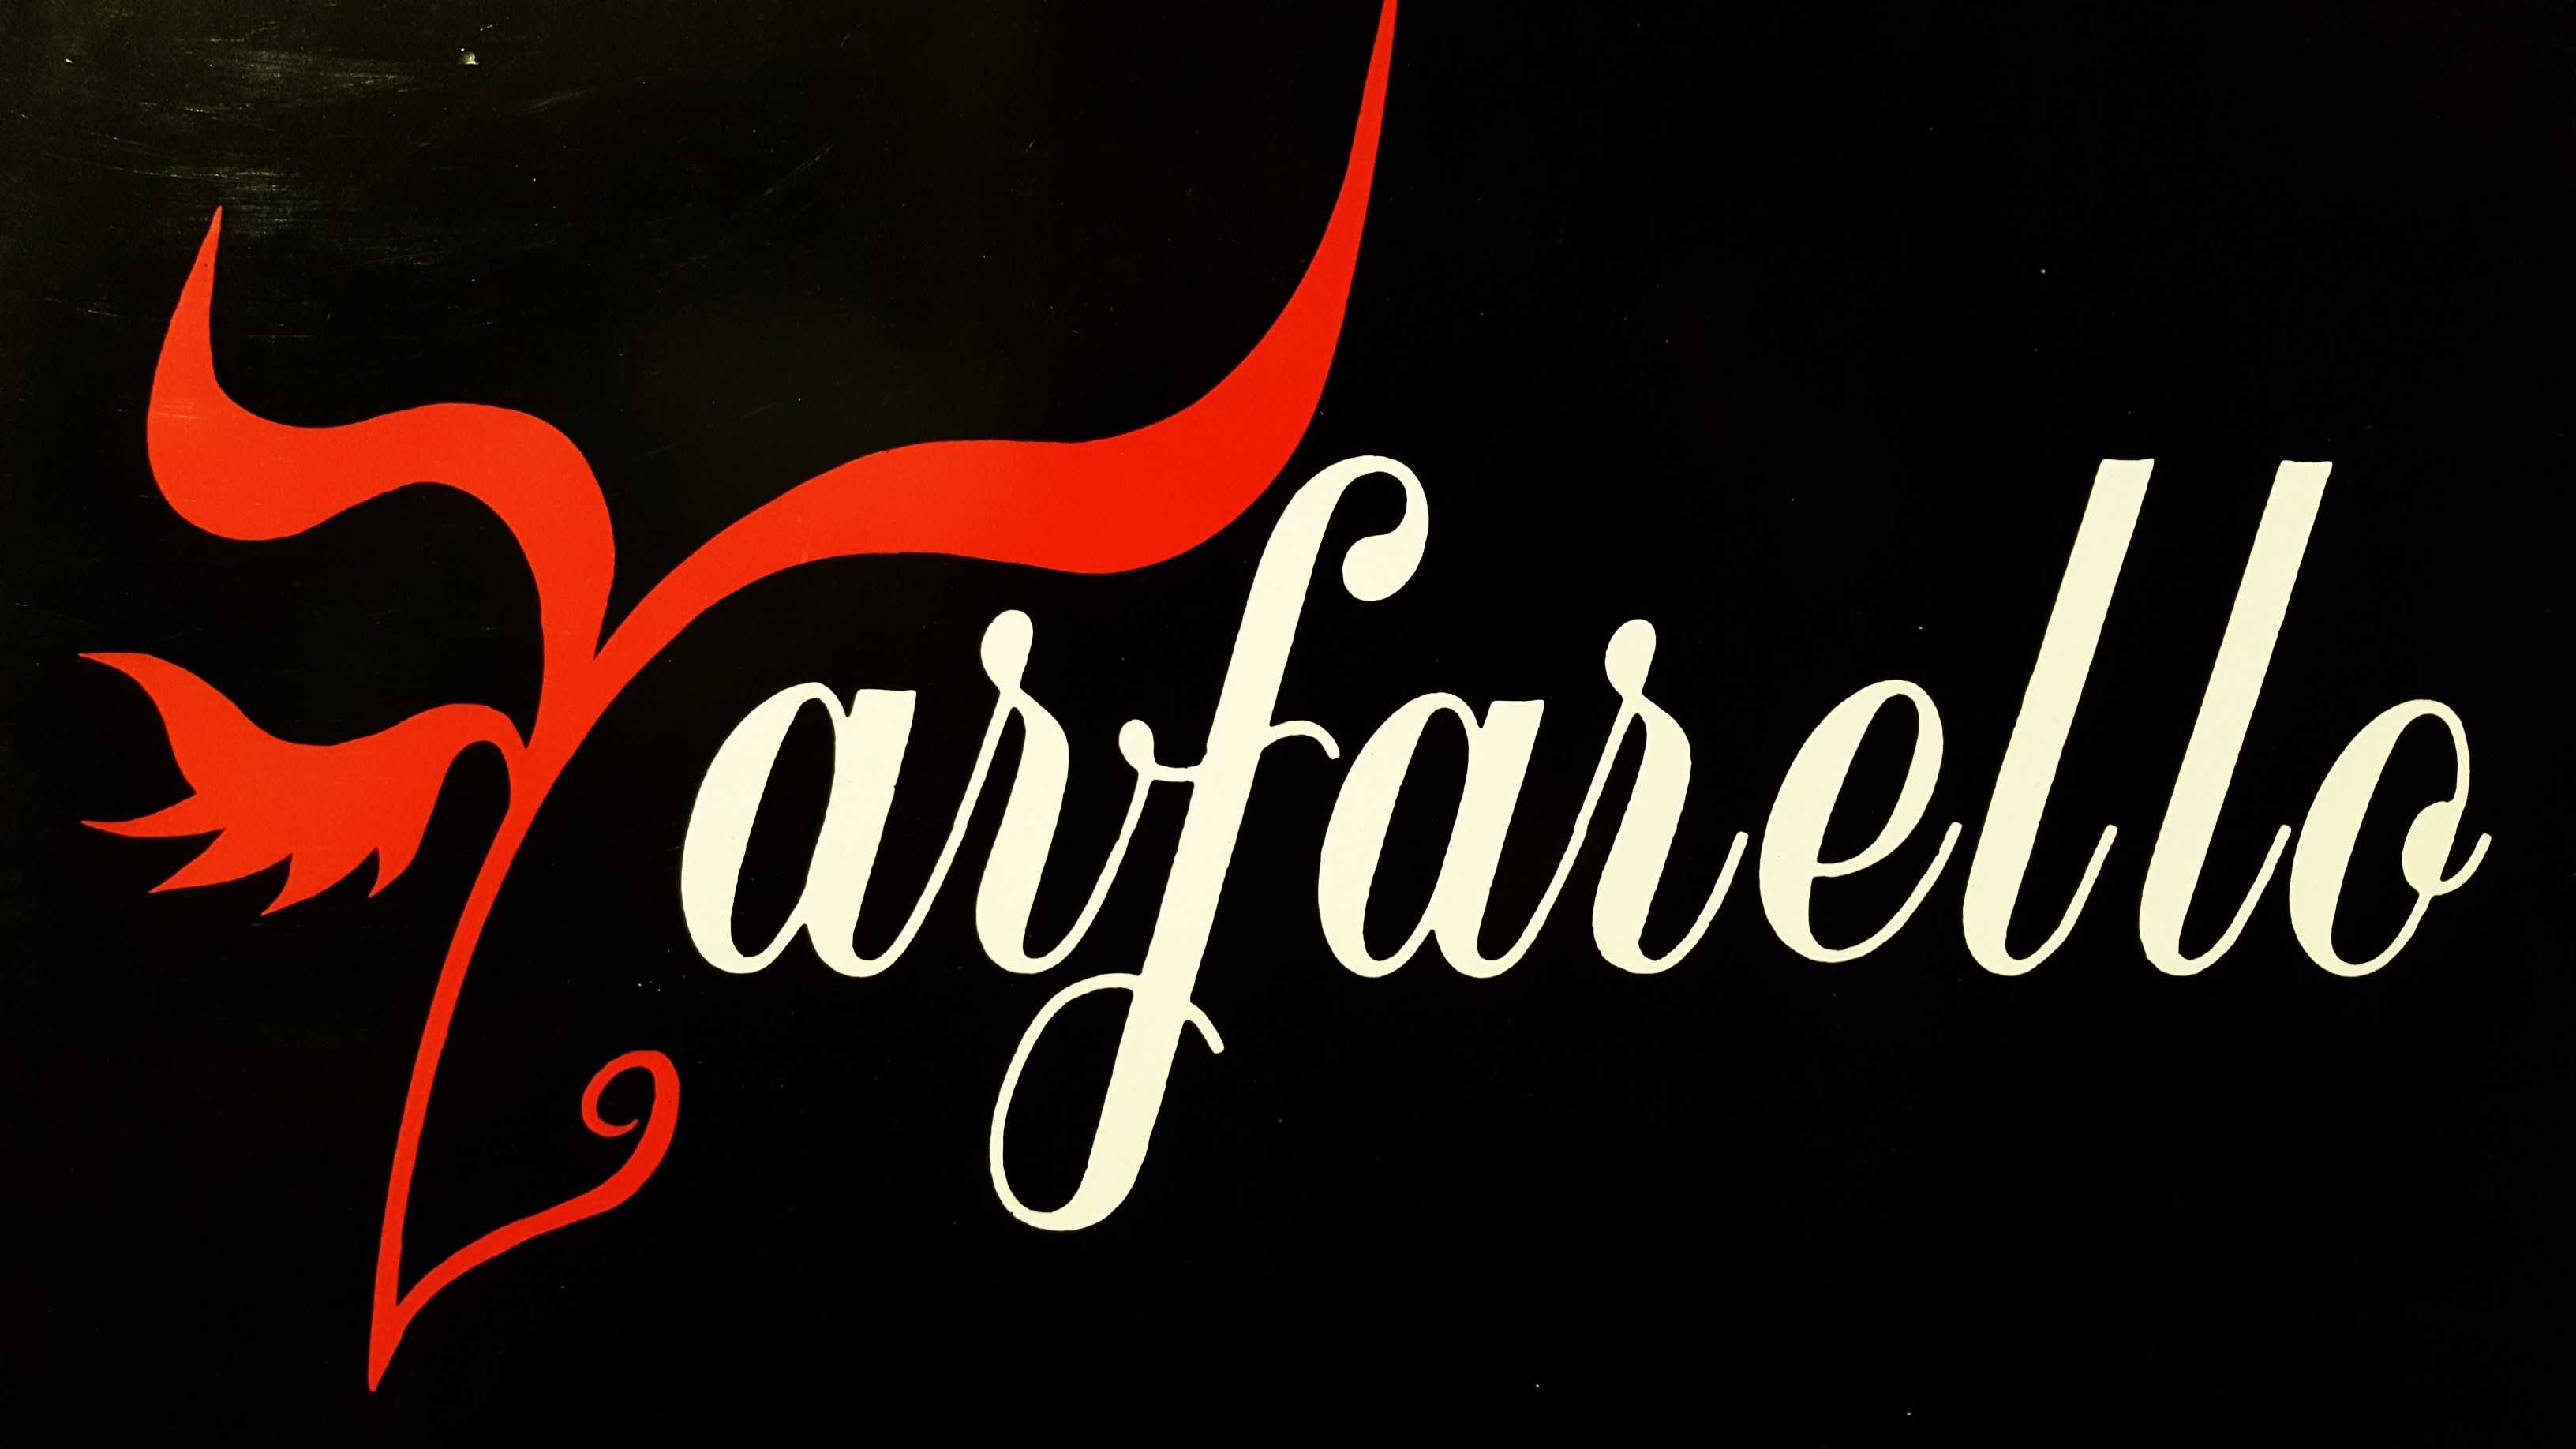 Jazz płyta winylowa Farfarello ,,The Farfarello,,